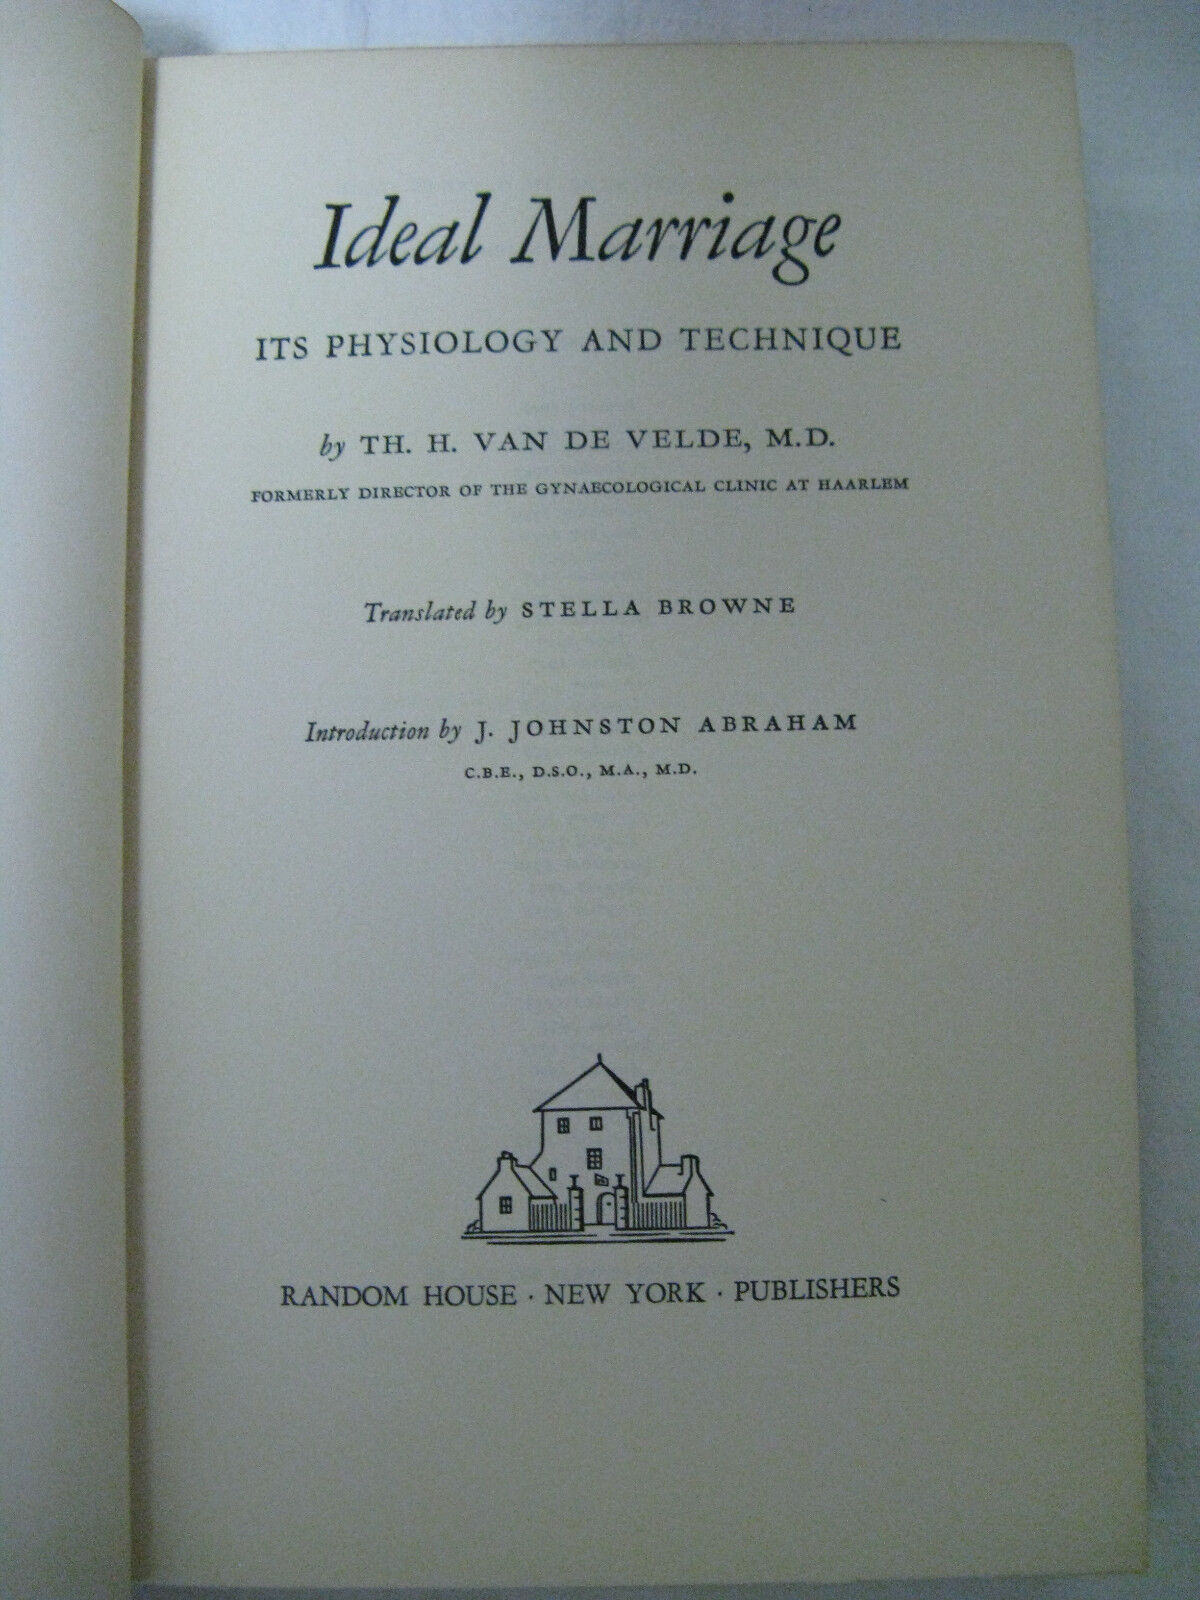 Ideal Marriage It's Physiology And Technique Van De Velde 37th Random Print